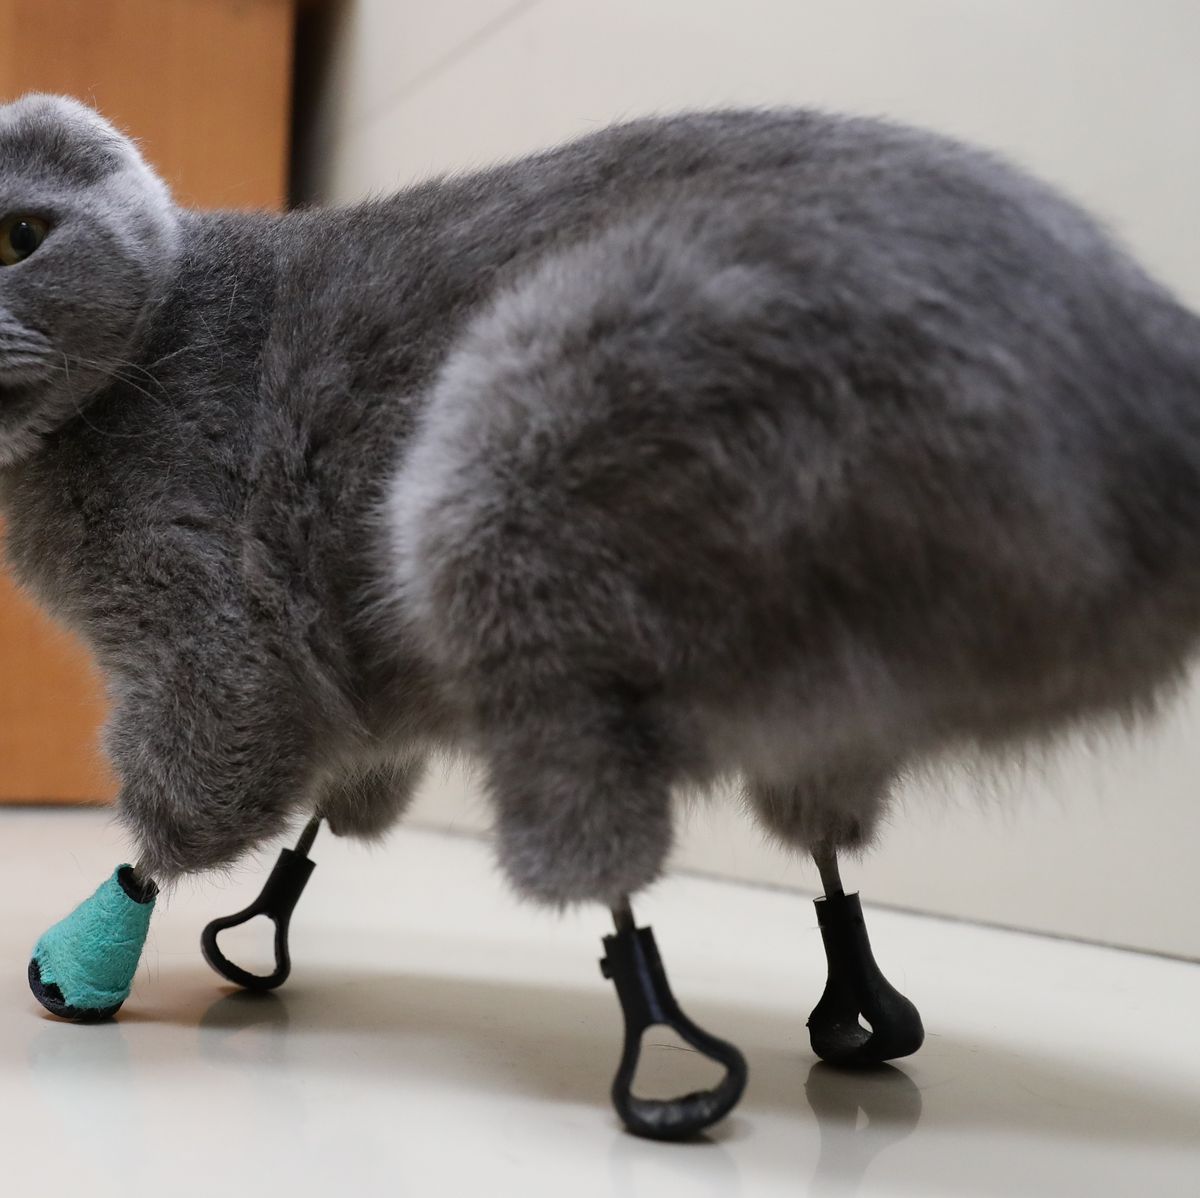 Dymka the Cat | This Hero Cat 3D-Printed Titanium Limbs